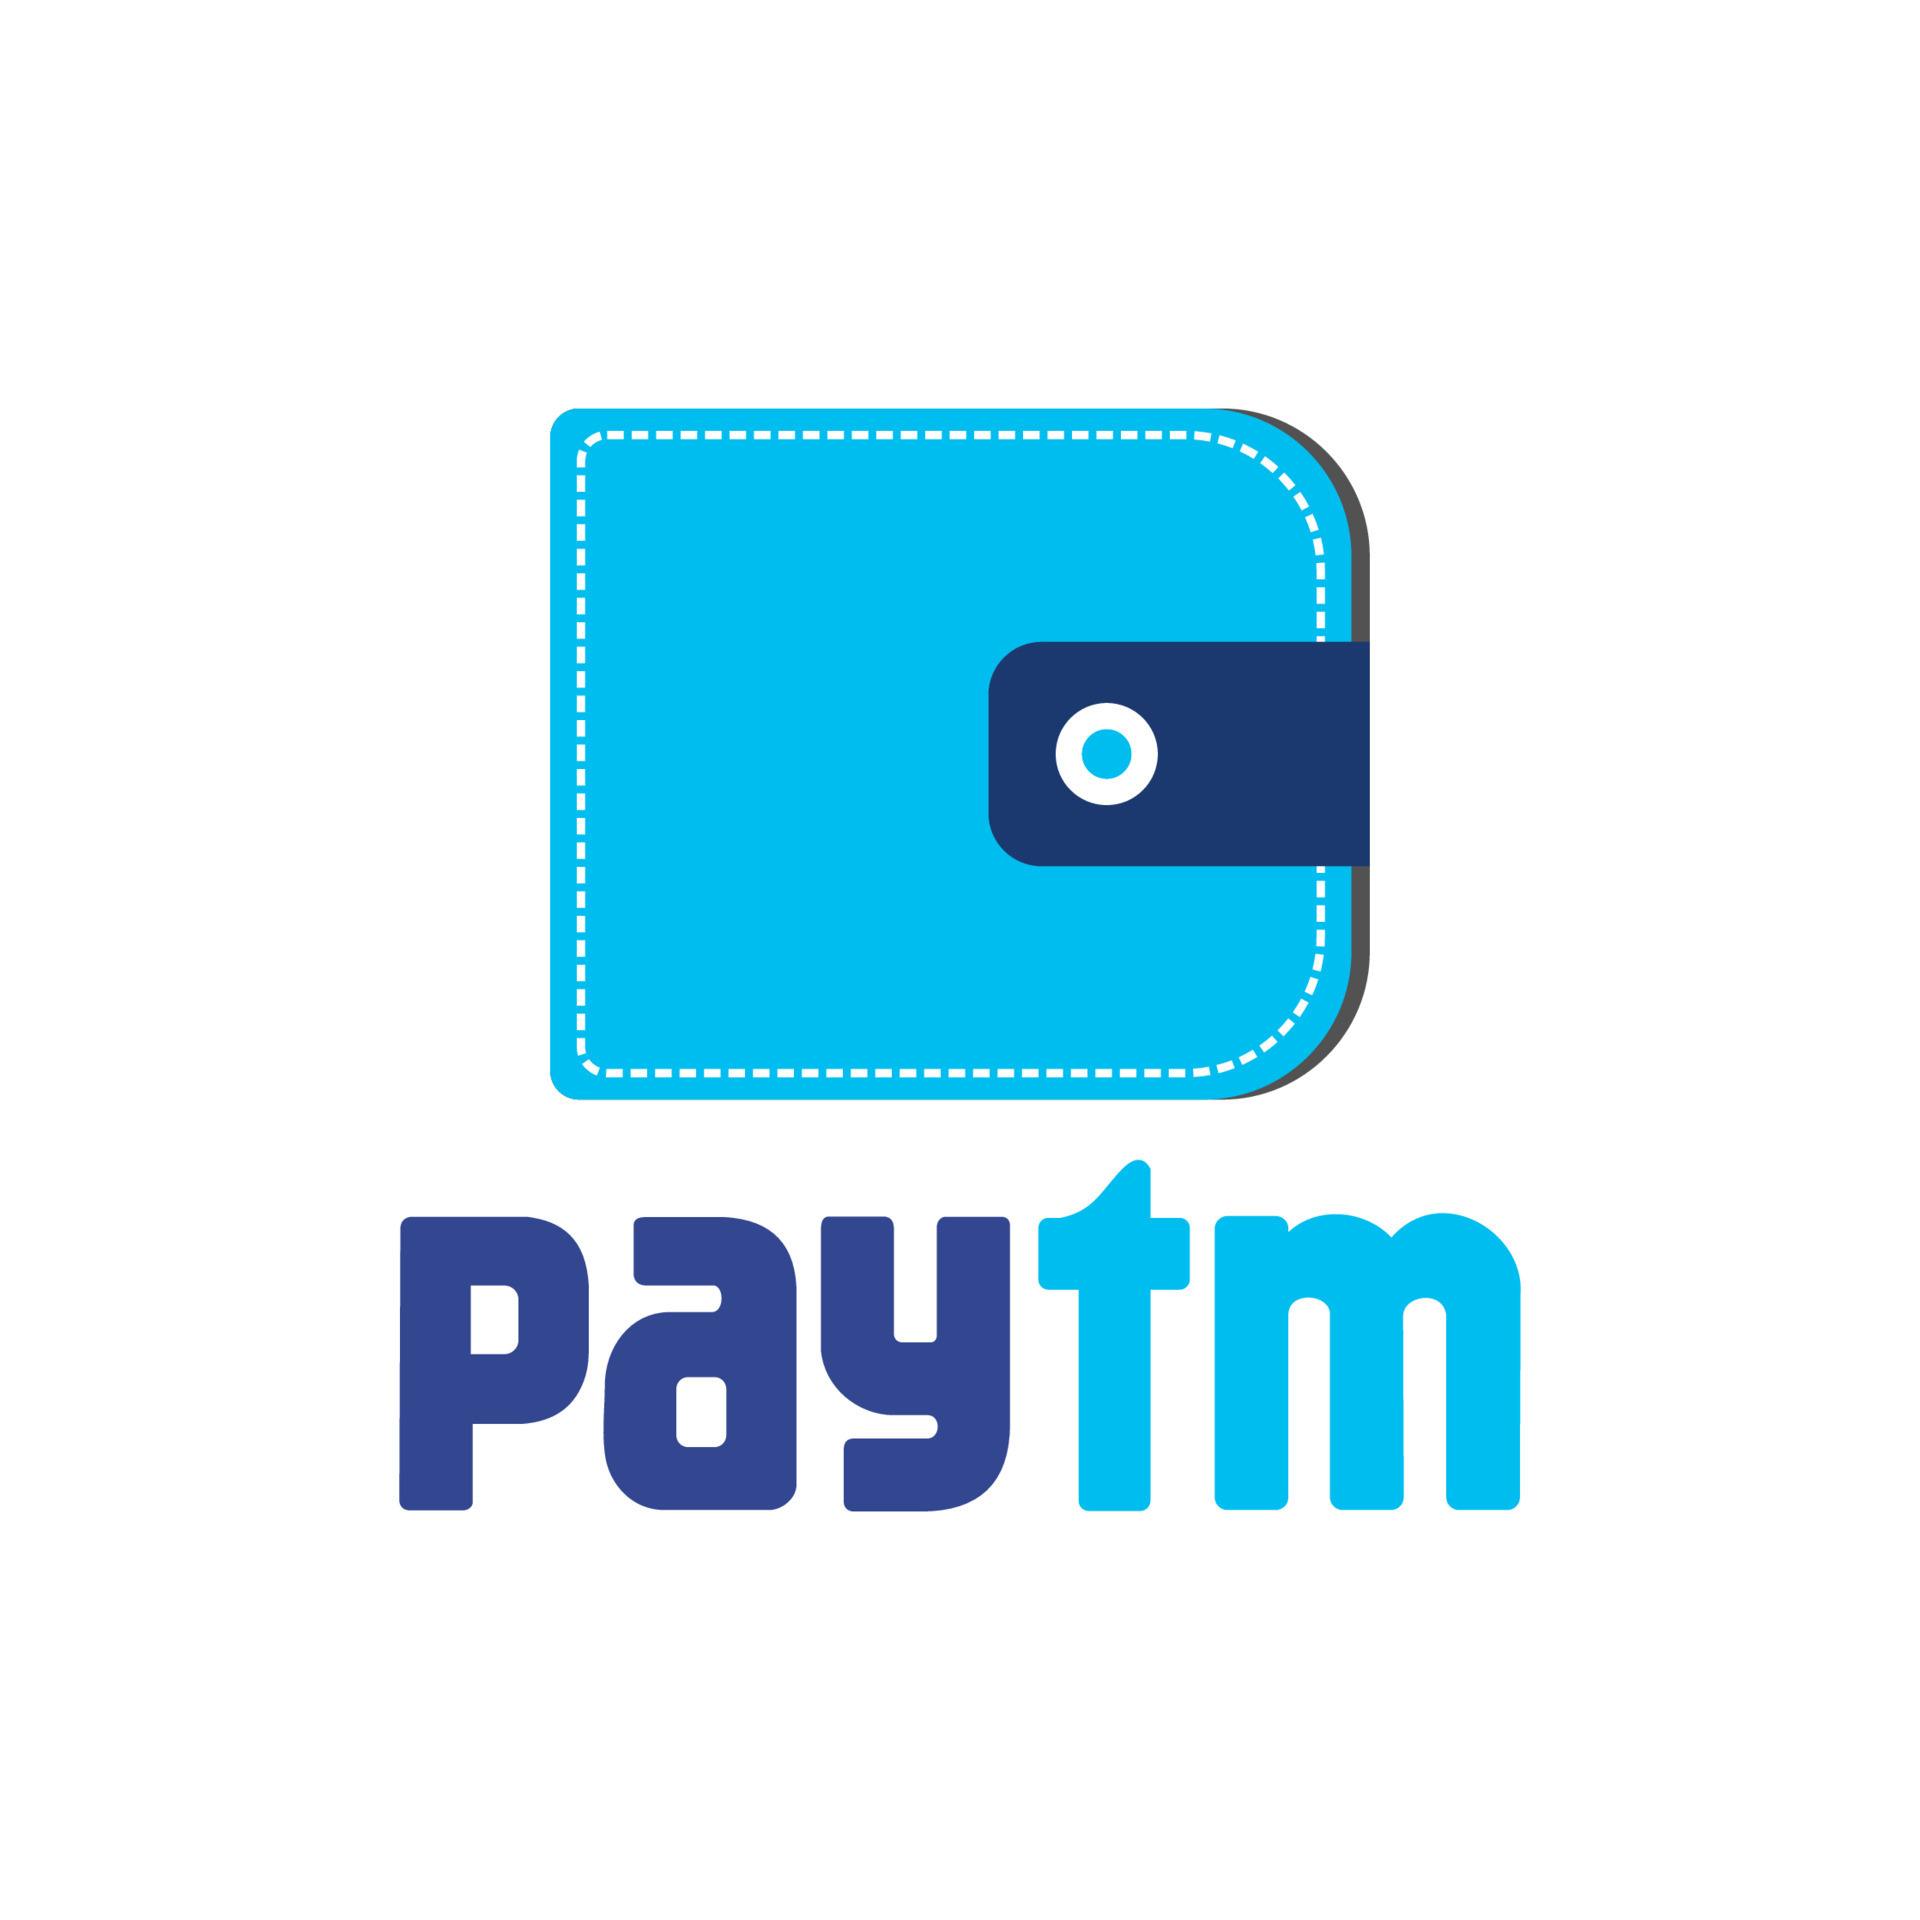 West Bangal, India - August 21, 2021 : Paytm App Logo on Phone Screen Stock  Image. Editorial Stock Photo - Image of india, finance: 233408978